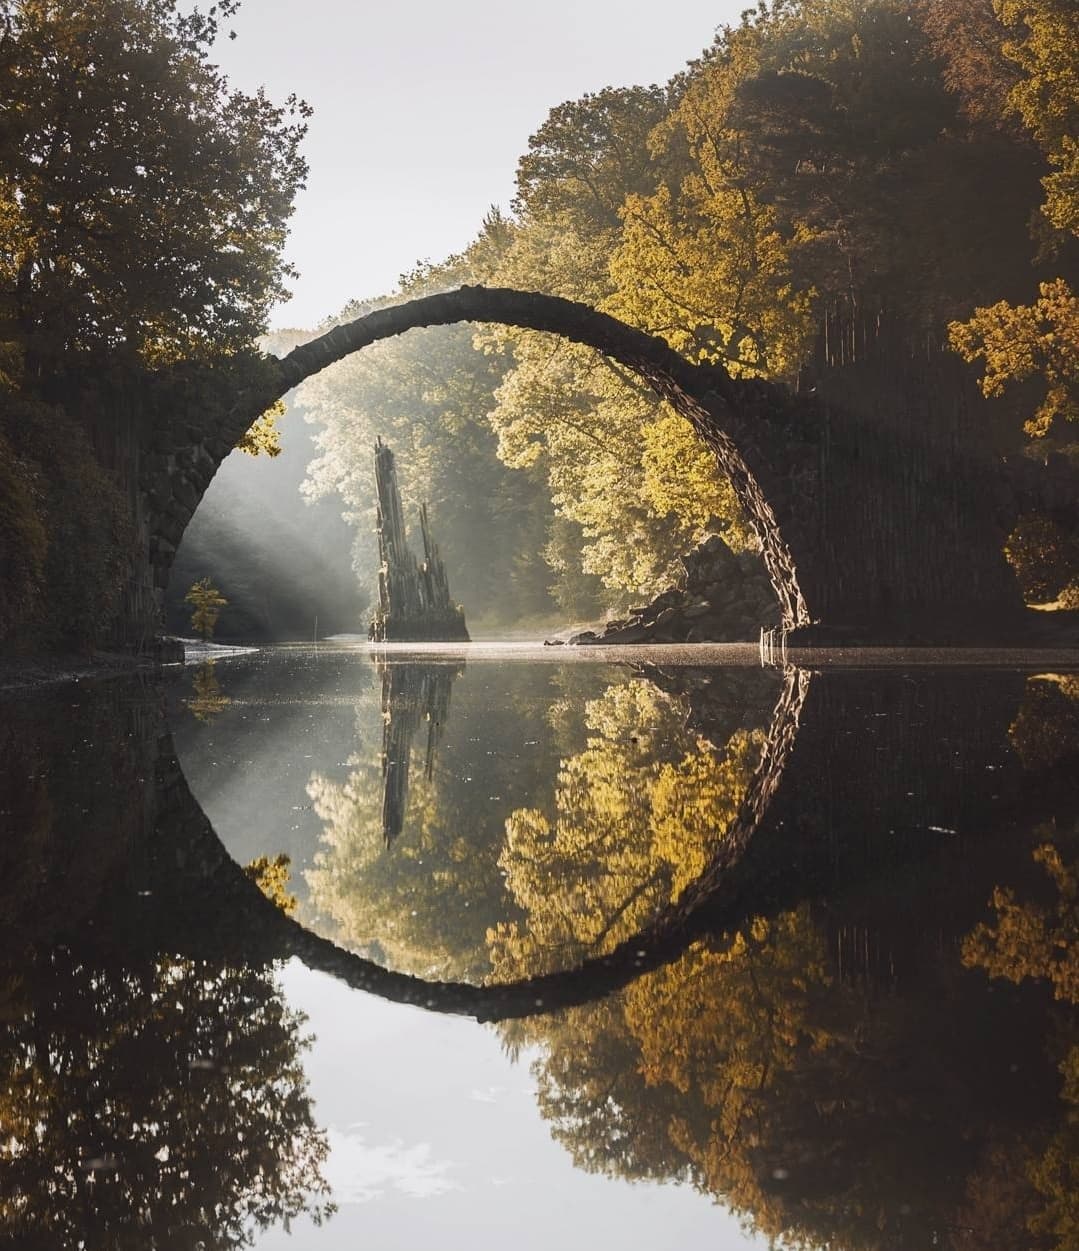 Rakotzbrukcke bridge and it's reflection.